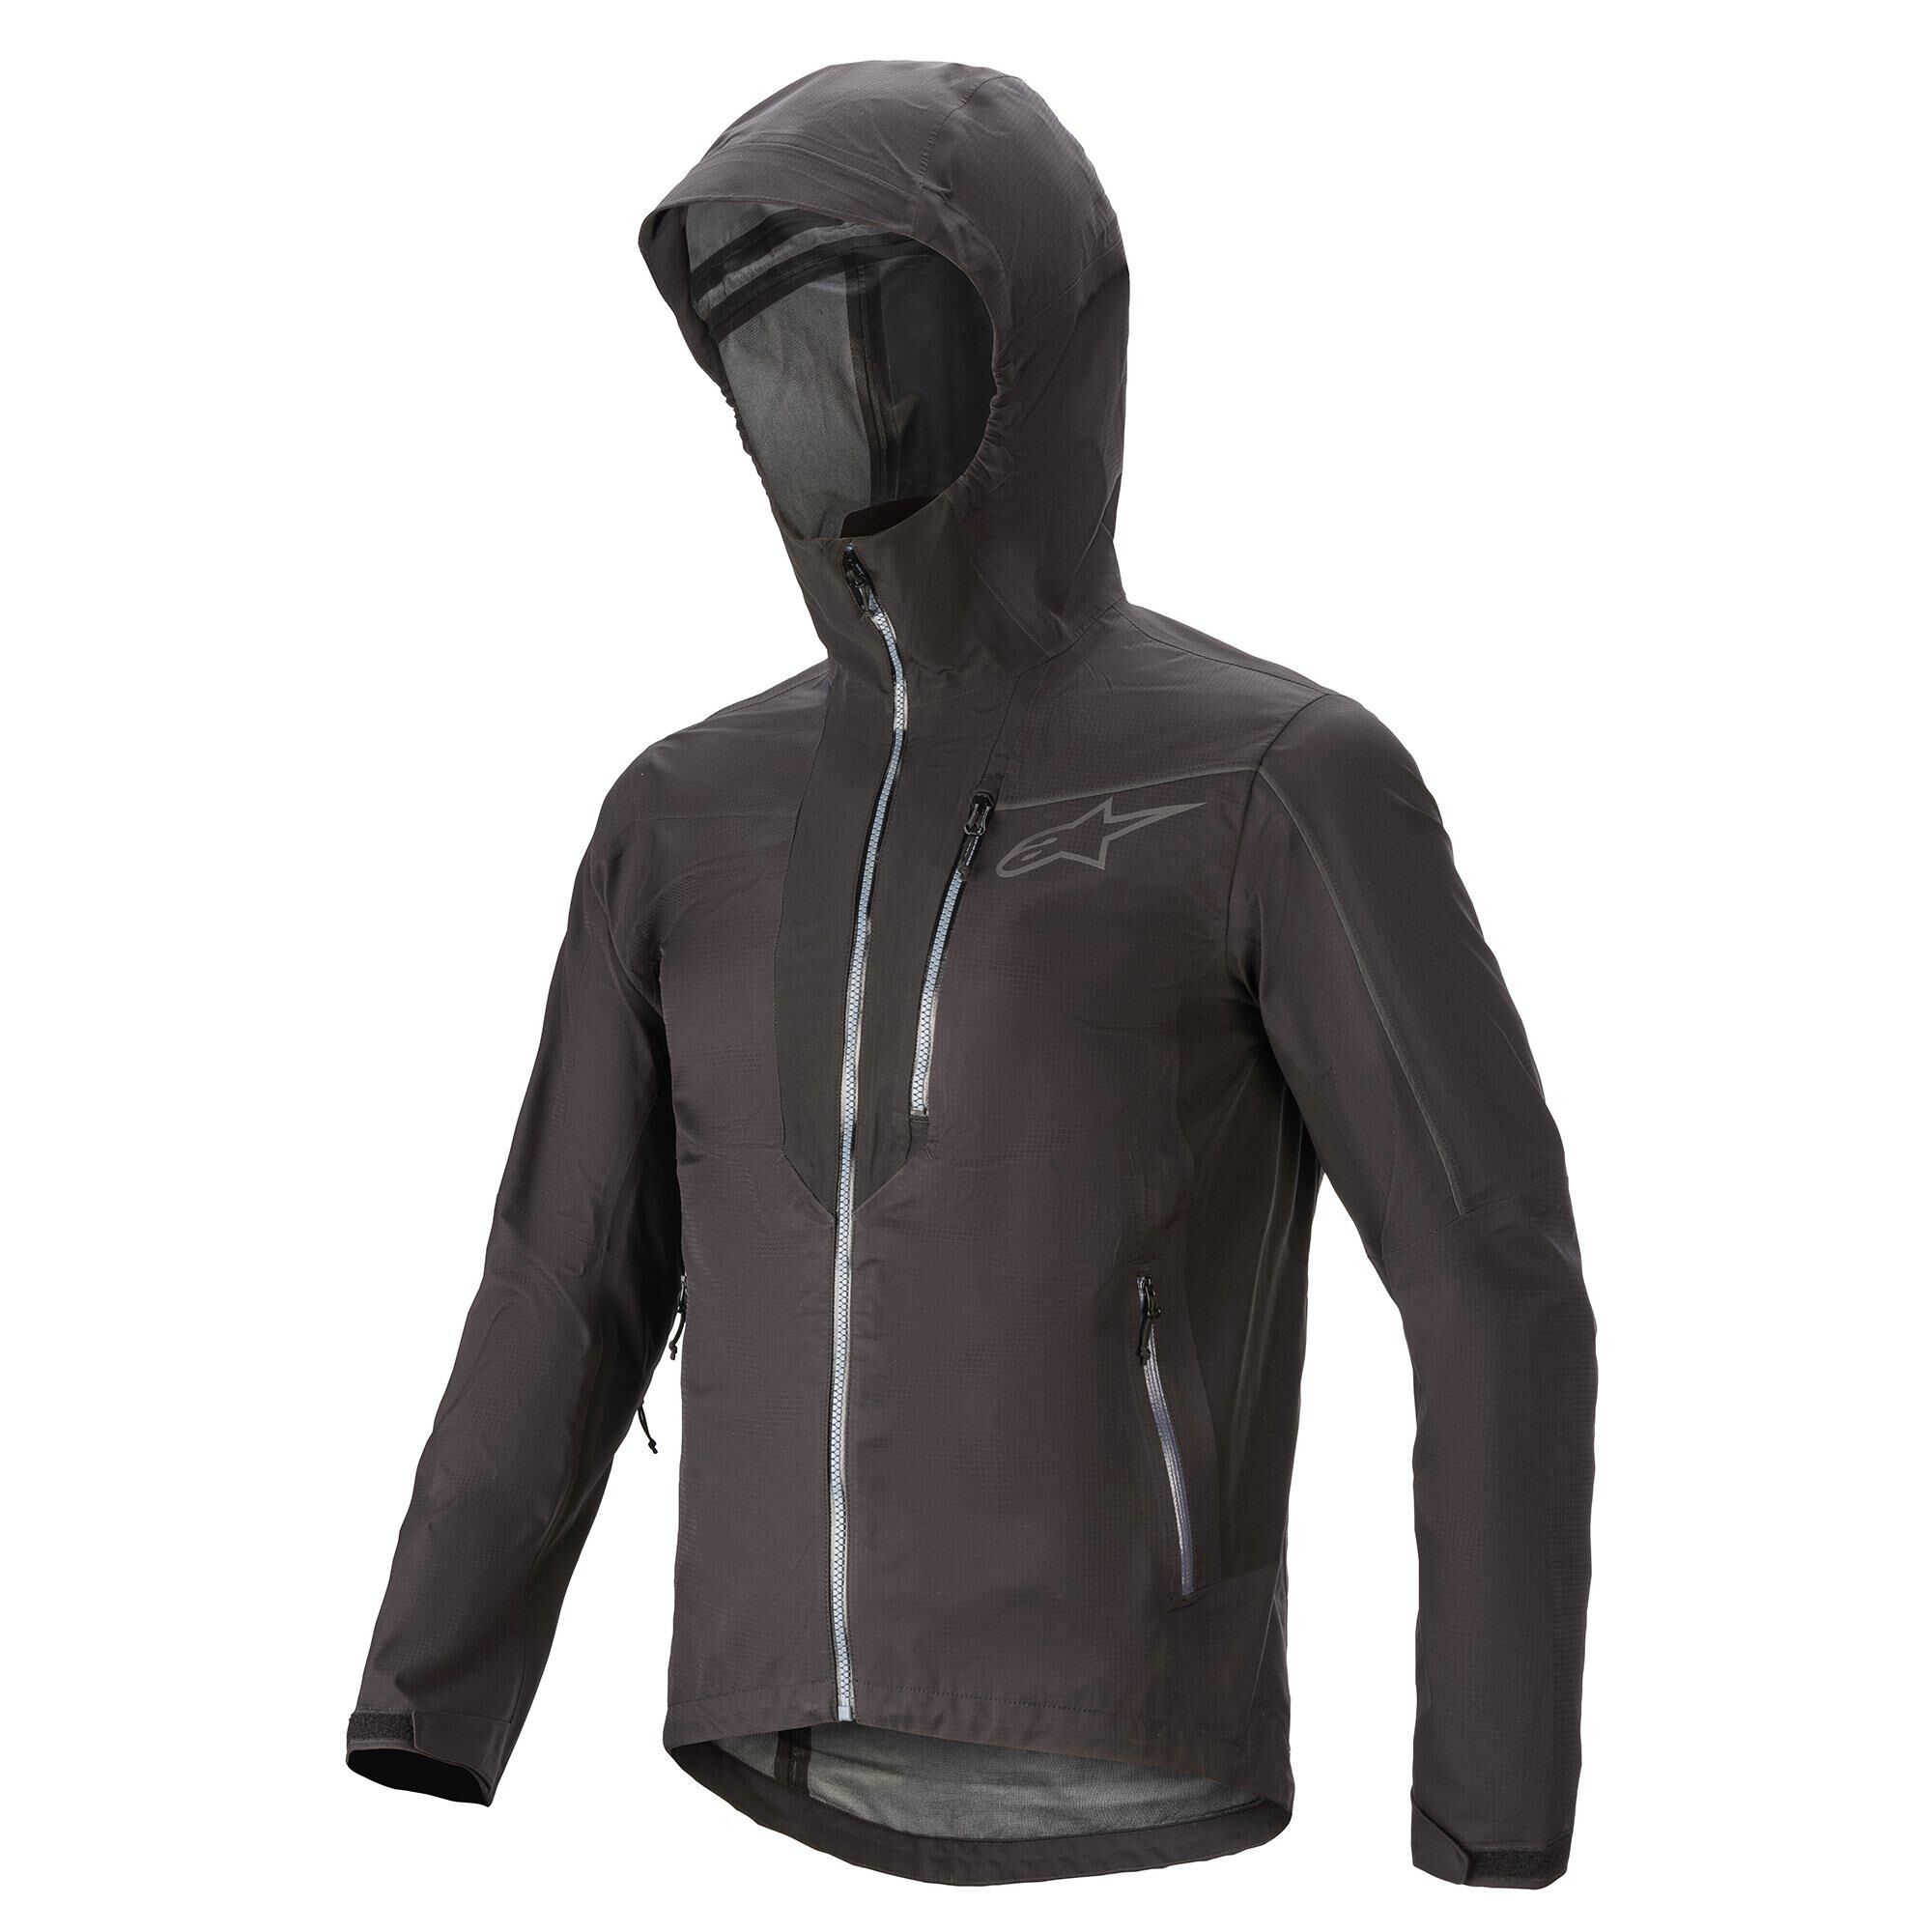 Alpine Stars Tahoe 8.0 Waterproof Jacket - Waterproof jacket - Men's